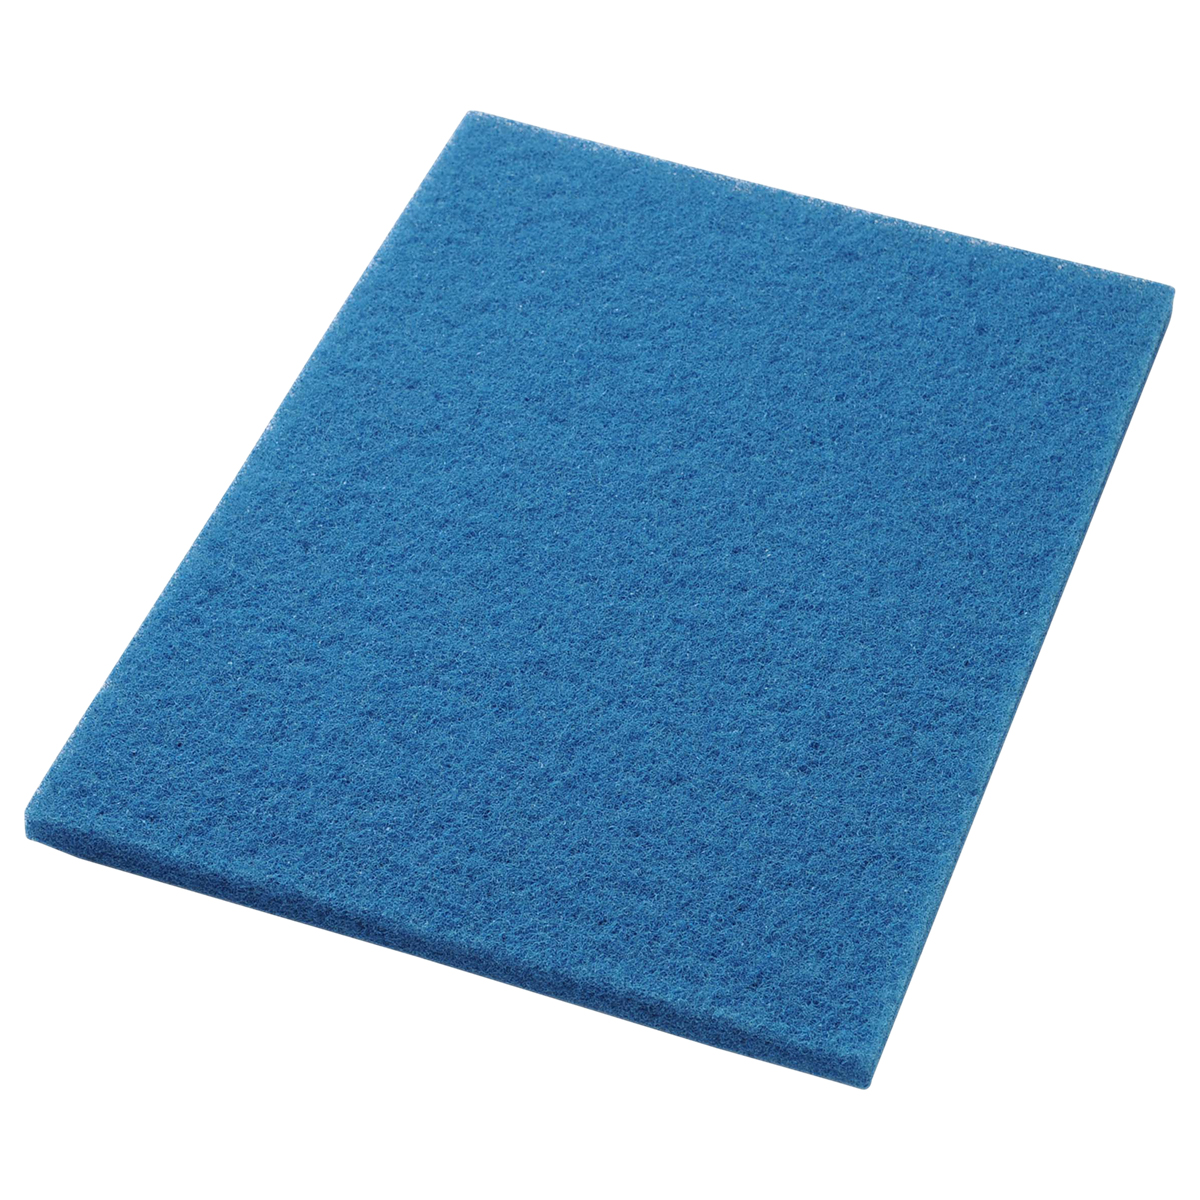 12"x18" Blue Cleaner Floor Pads, Square, 5/cs